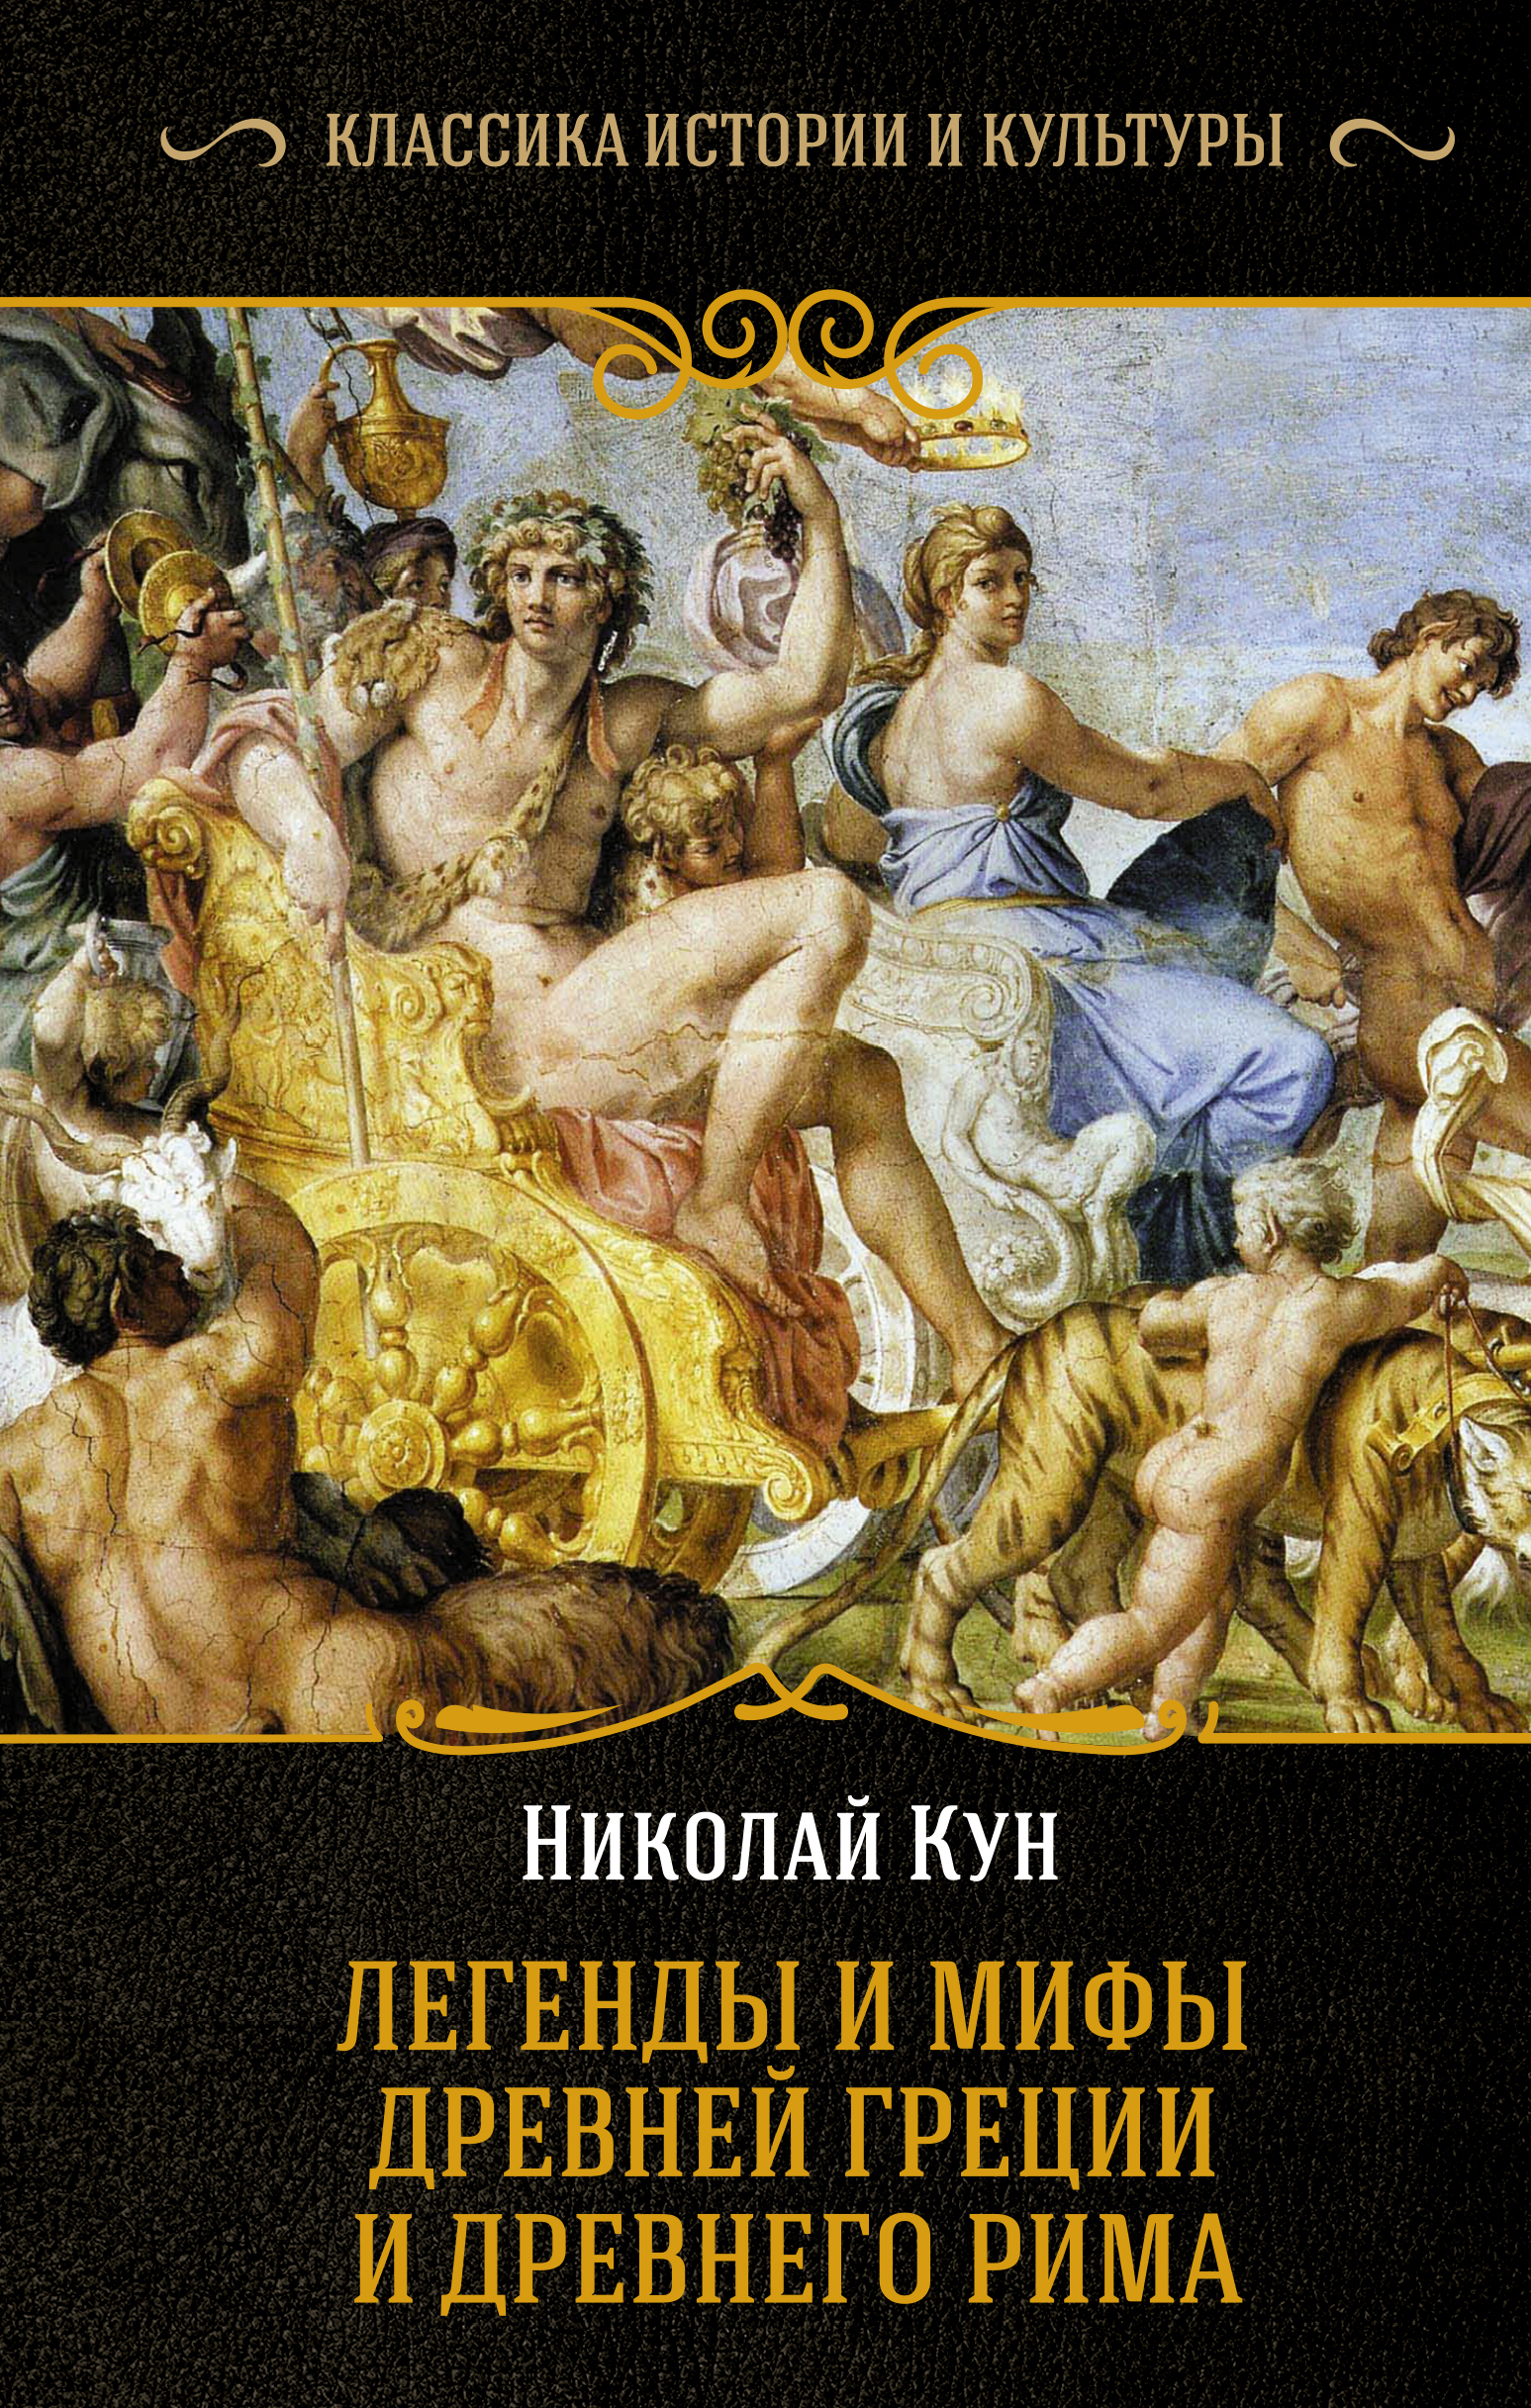 Мифы древней греции книг кун. Книга легенды и мифы древней Греции н.а кун.